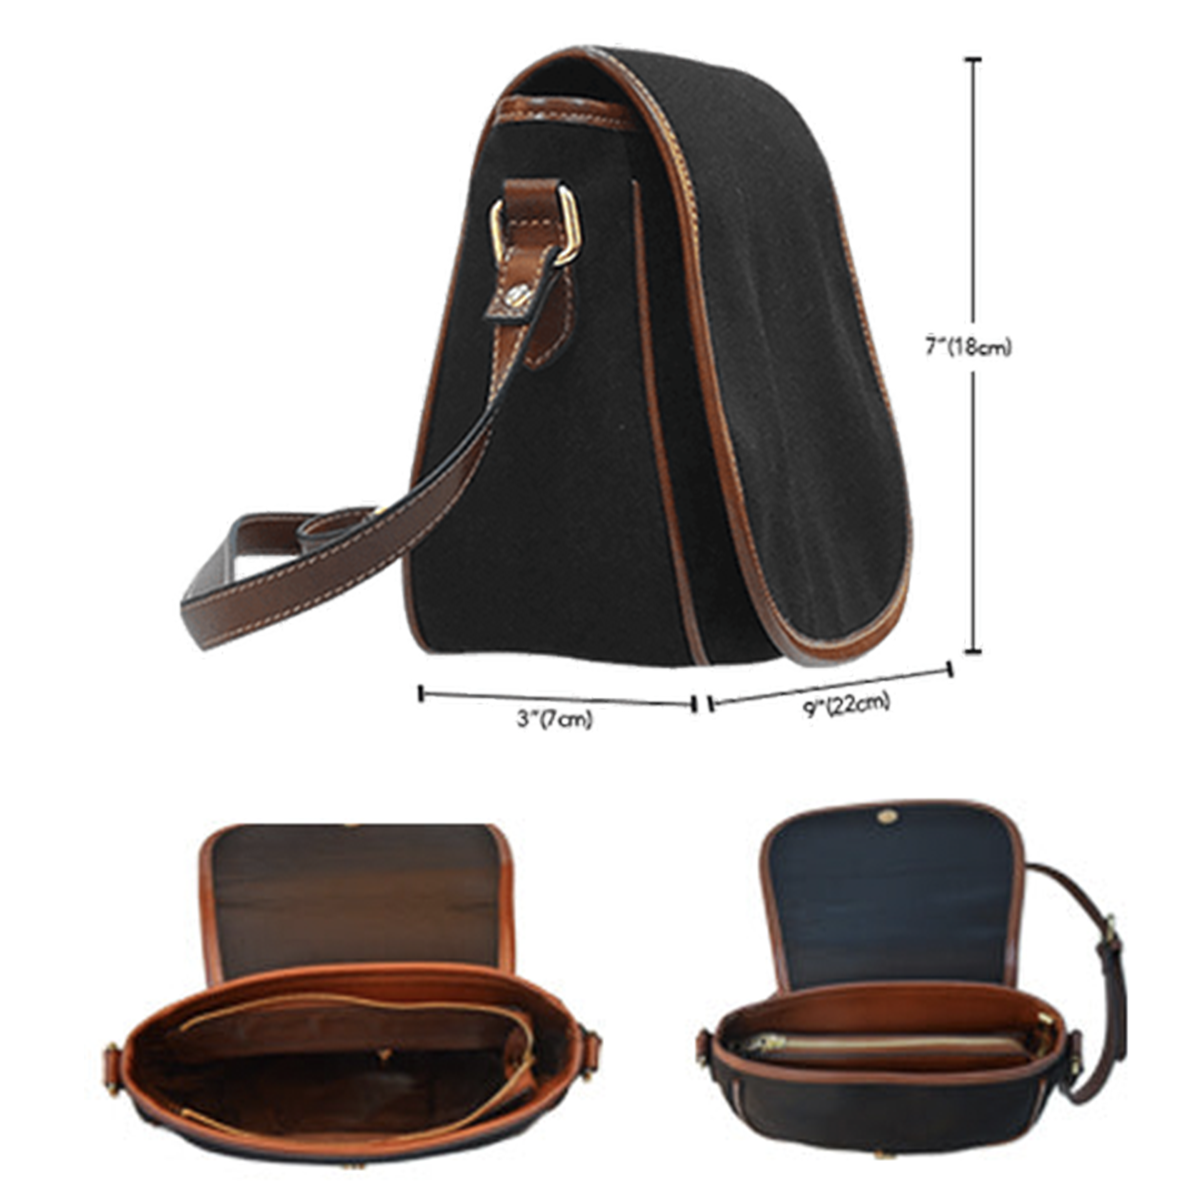 Whitson 01 Tartan Saddle Handbags